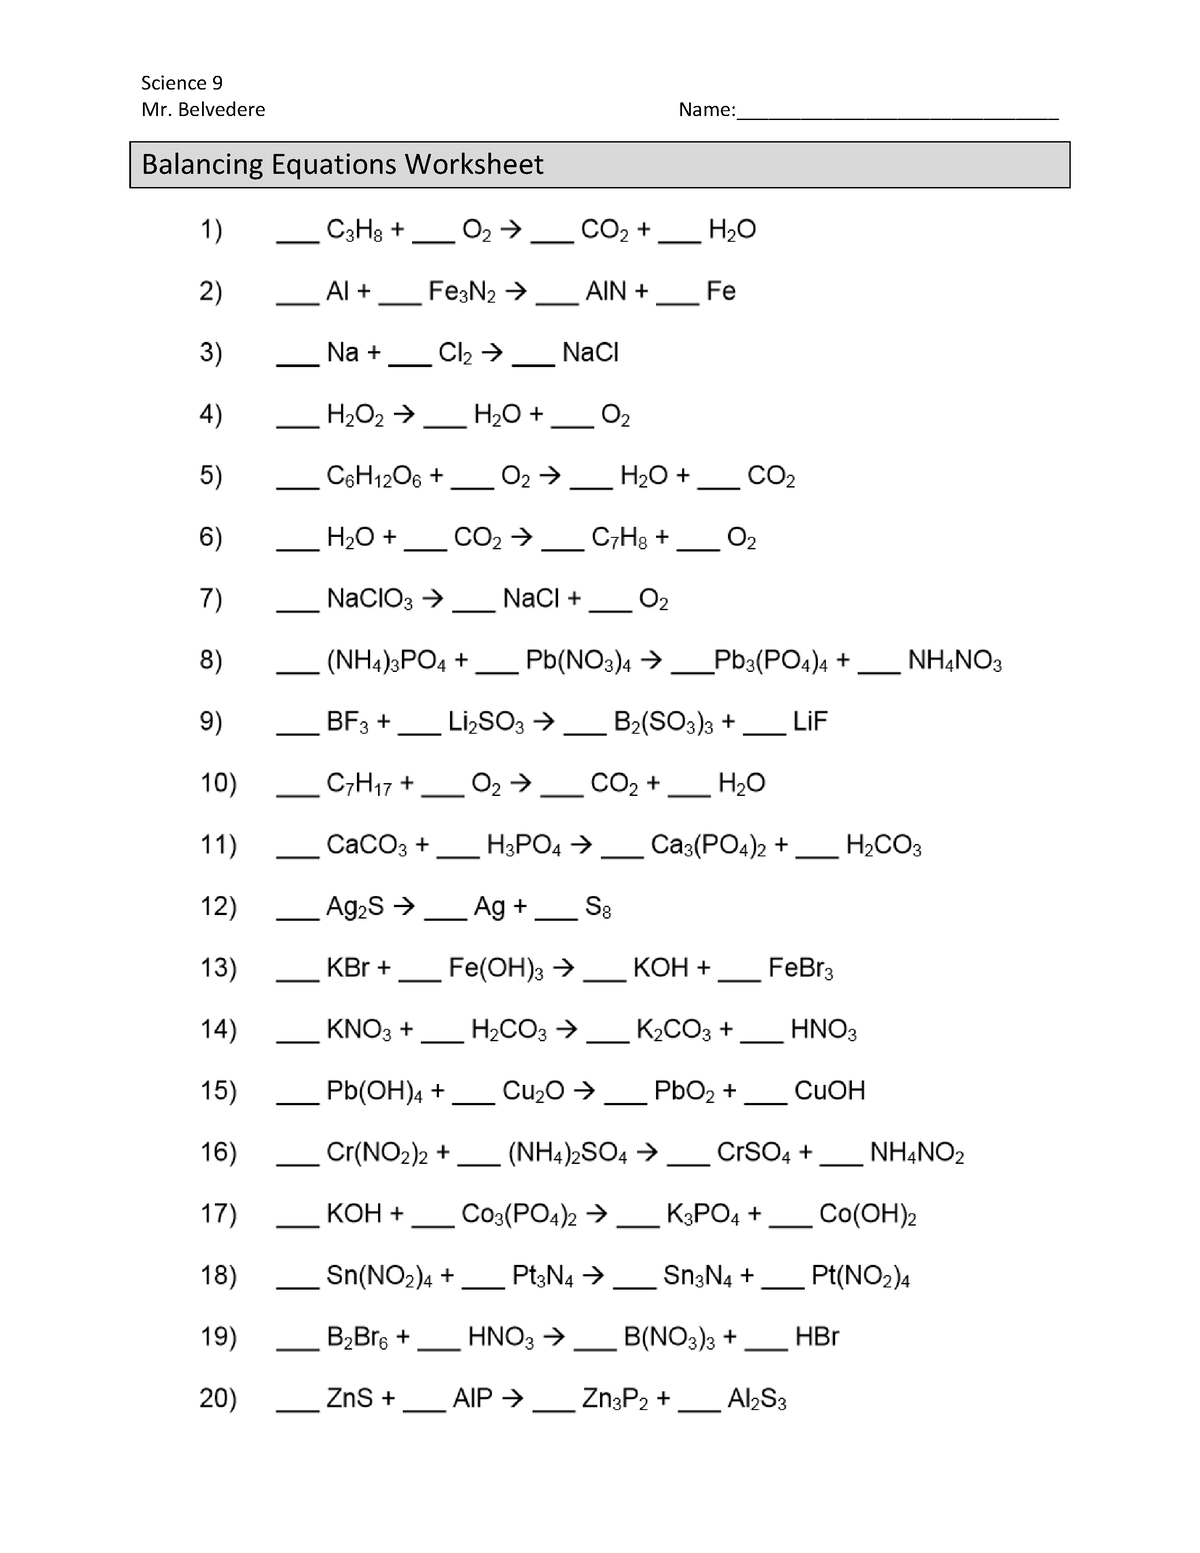 Balancing Chemical Equations 2 Worksheet Answers